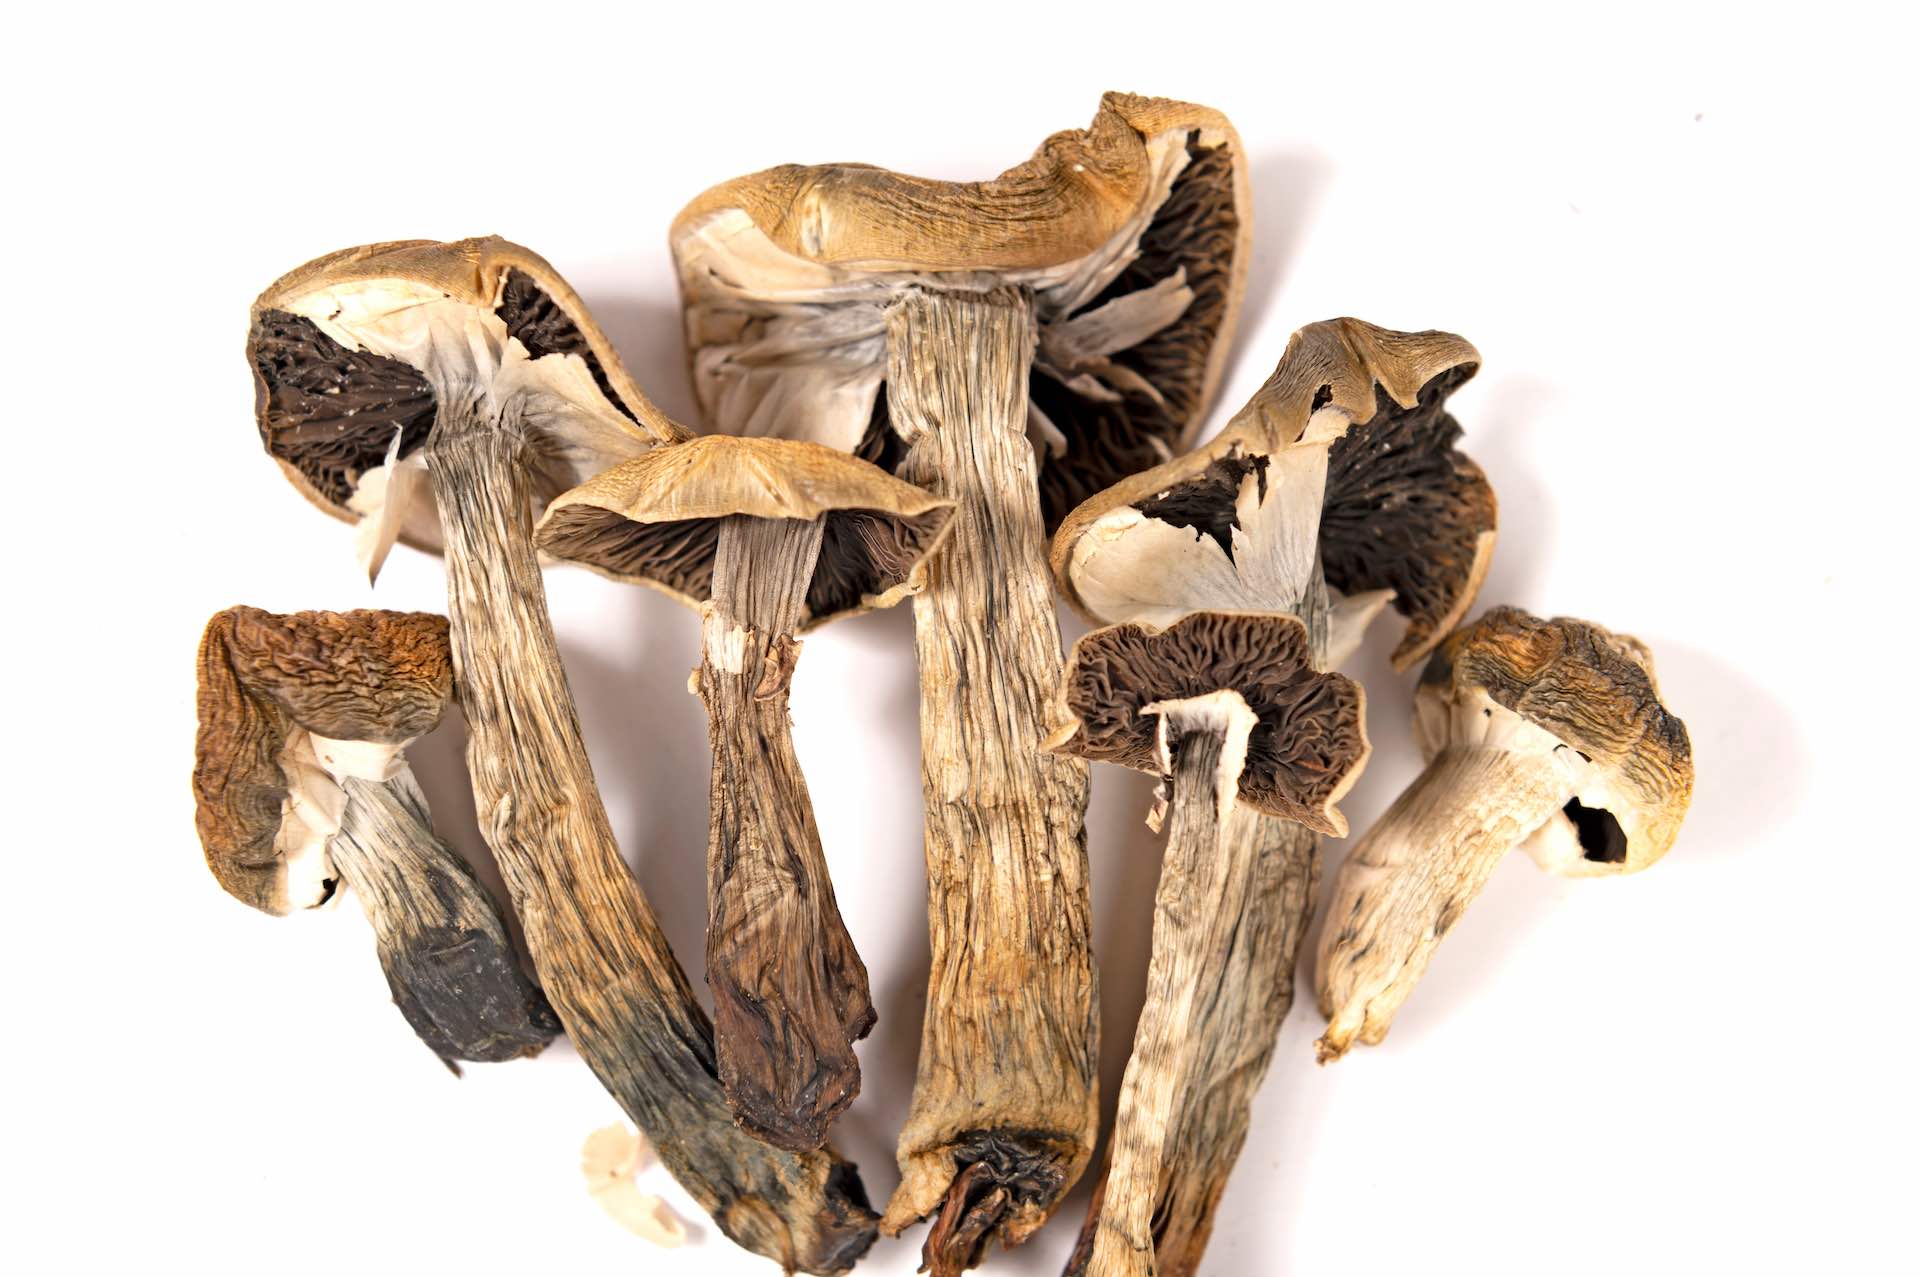 Dried magic mushrooms (psilocybe cubensis)